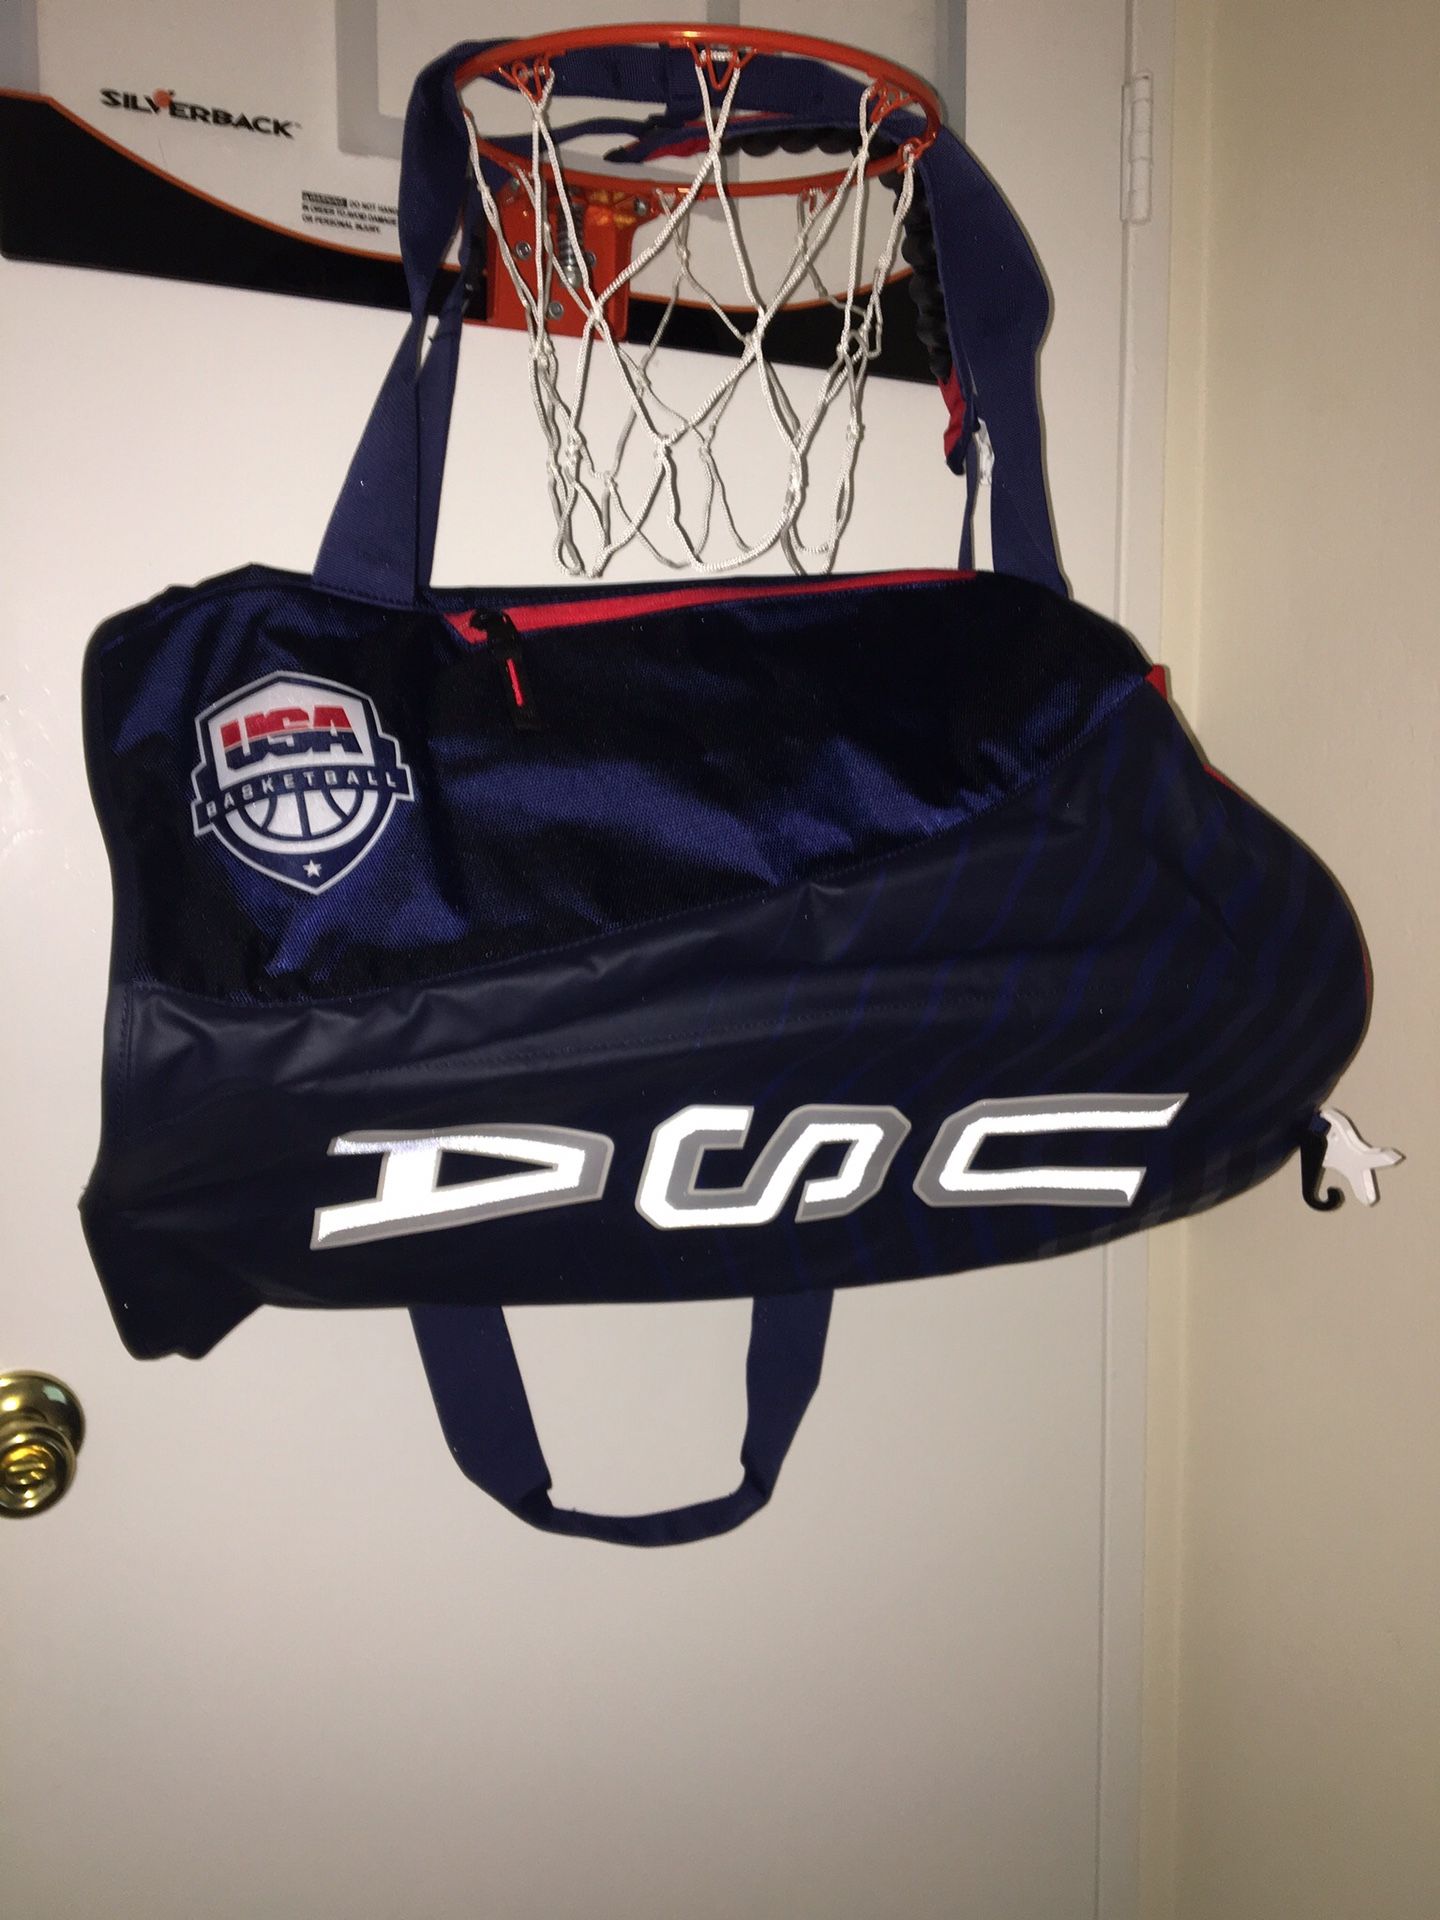 Brand New Nike Men’s Team USA Basketball duffle bag